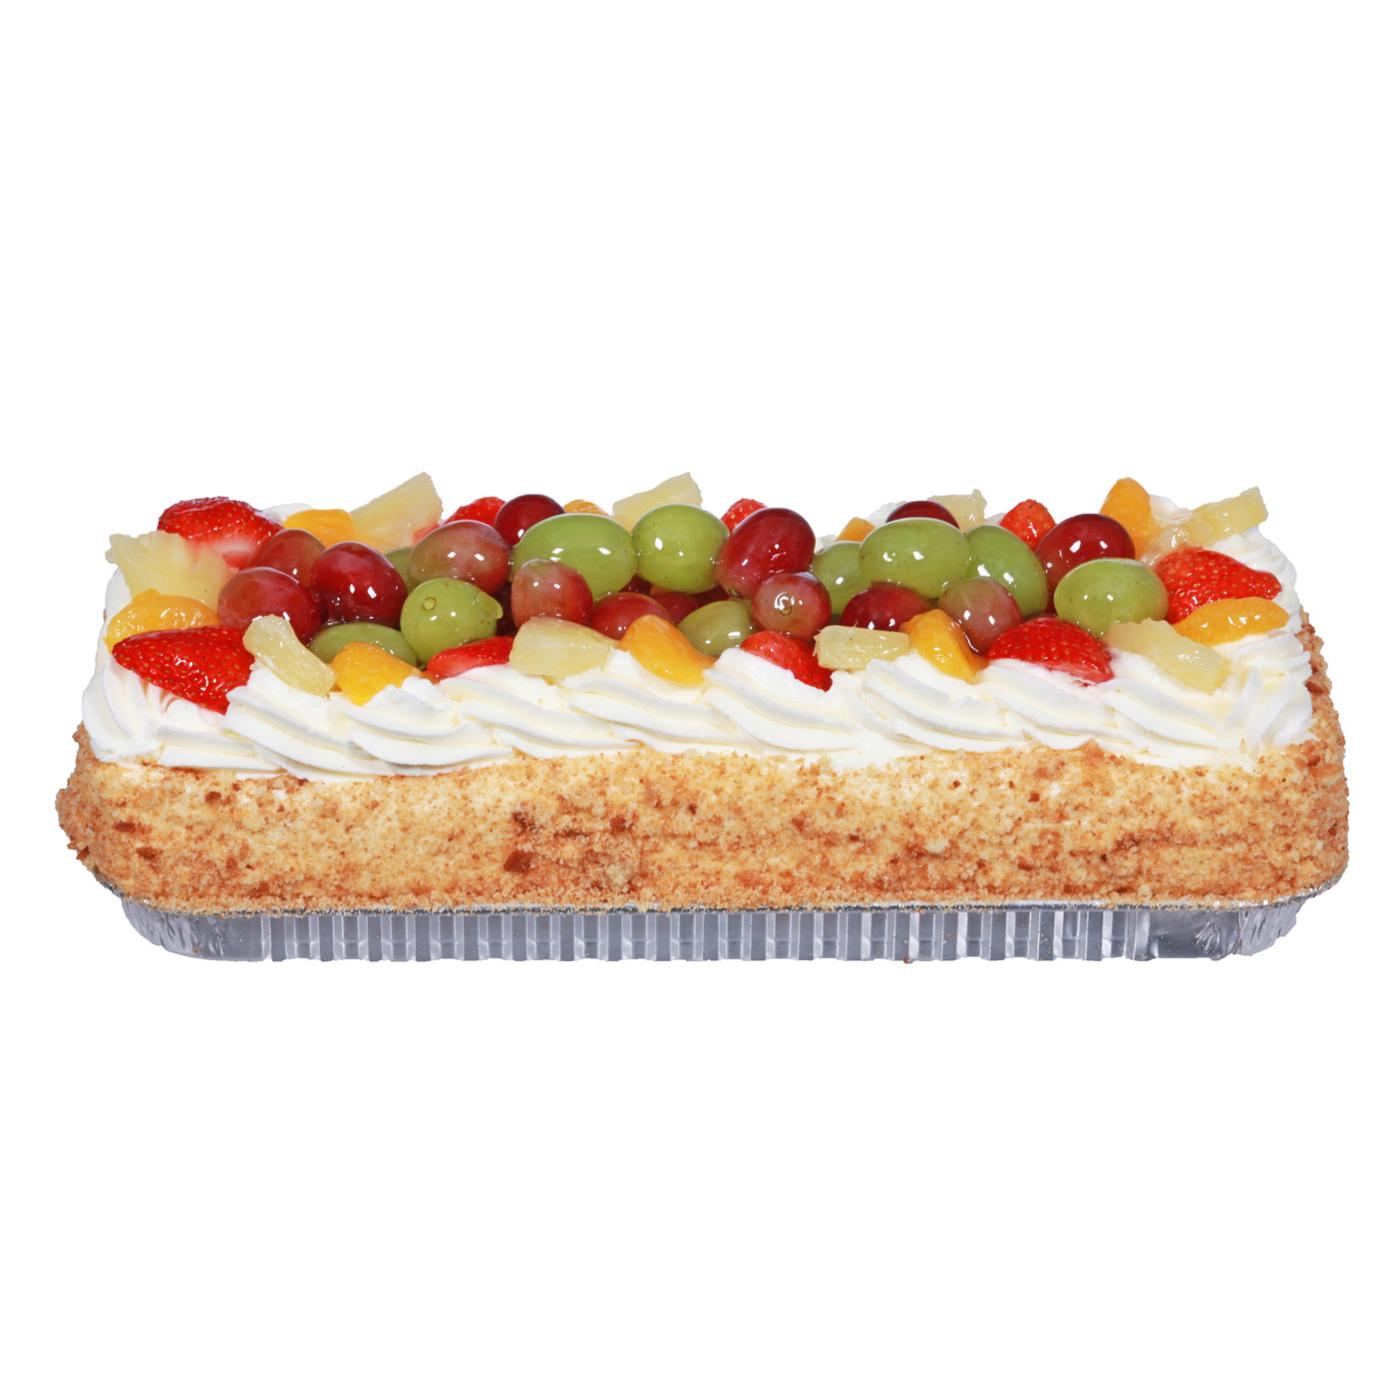 H-E-B Bakery Full Fruit Tres Leches Cake; image 1 of 2